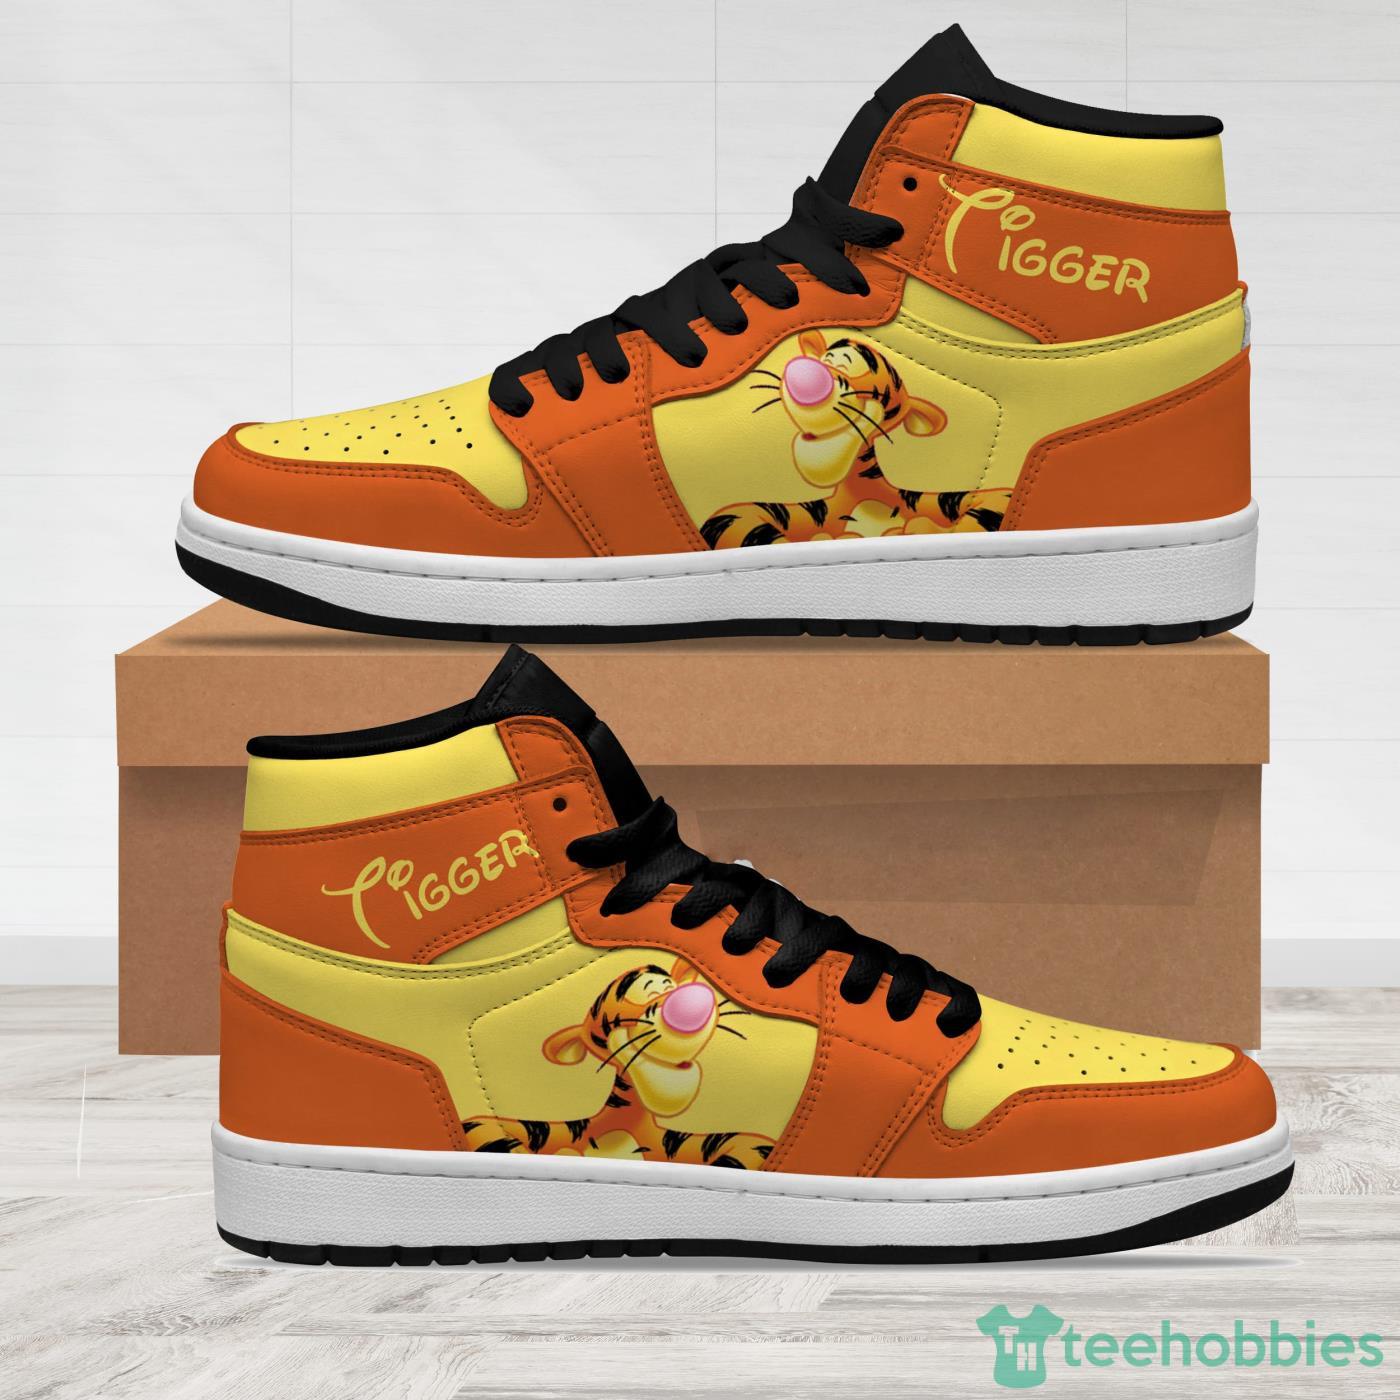 Tigger Orange Yellow Sneaker Boots Disney Air Jordan Hightop Shoes Product Photo 1